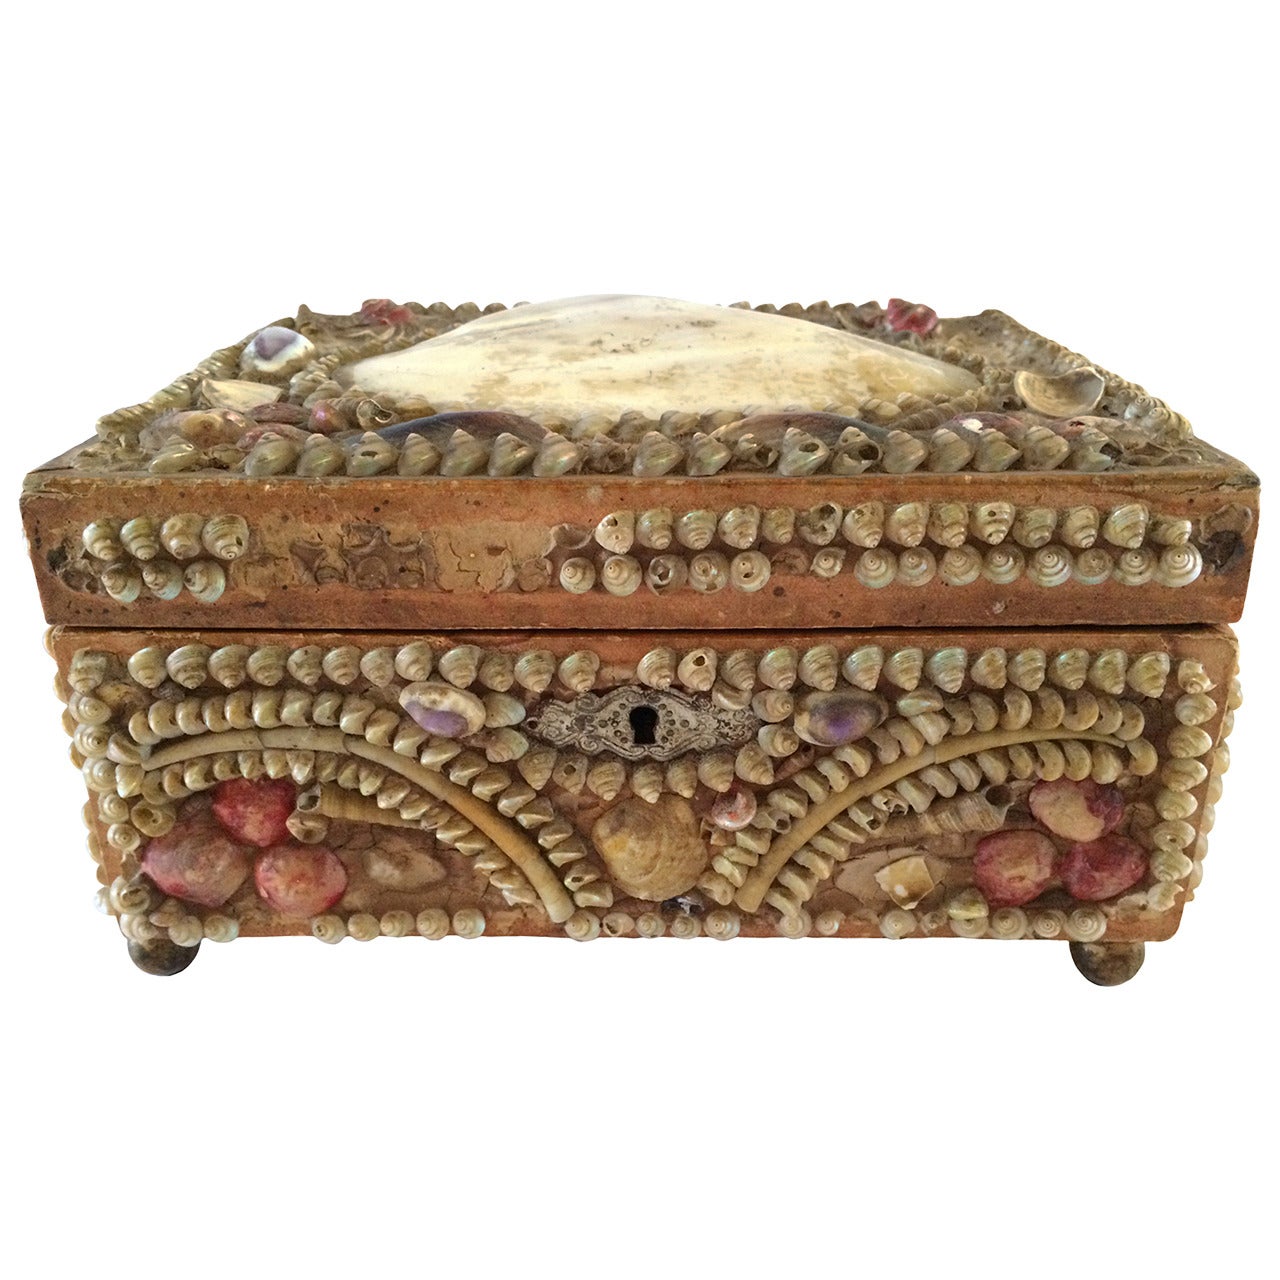 19th Century French Inlay Shell Box